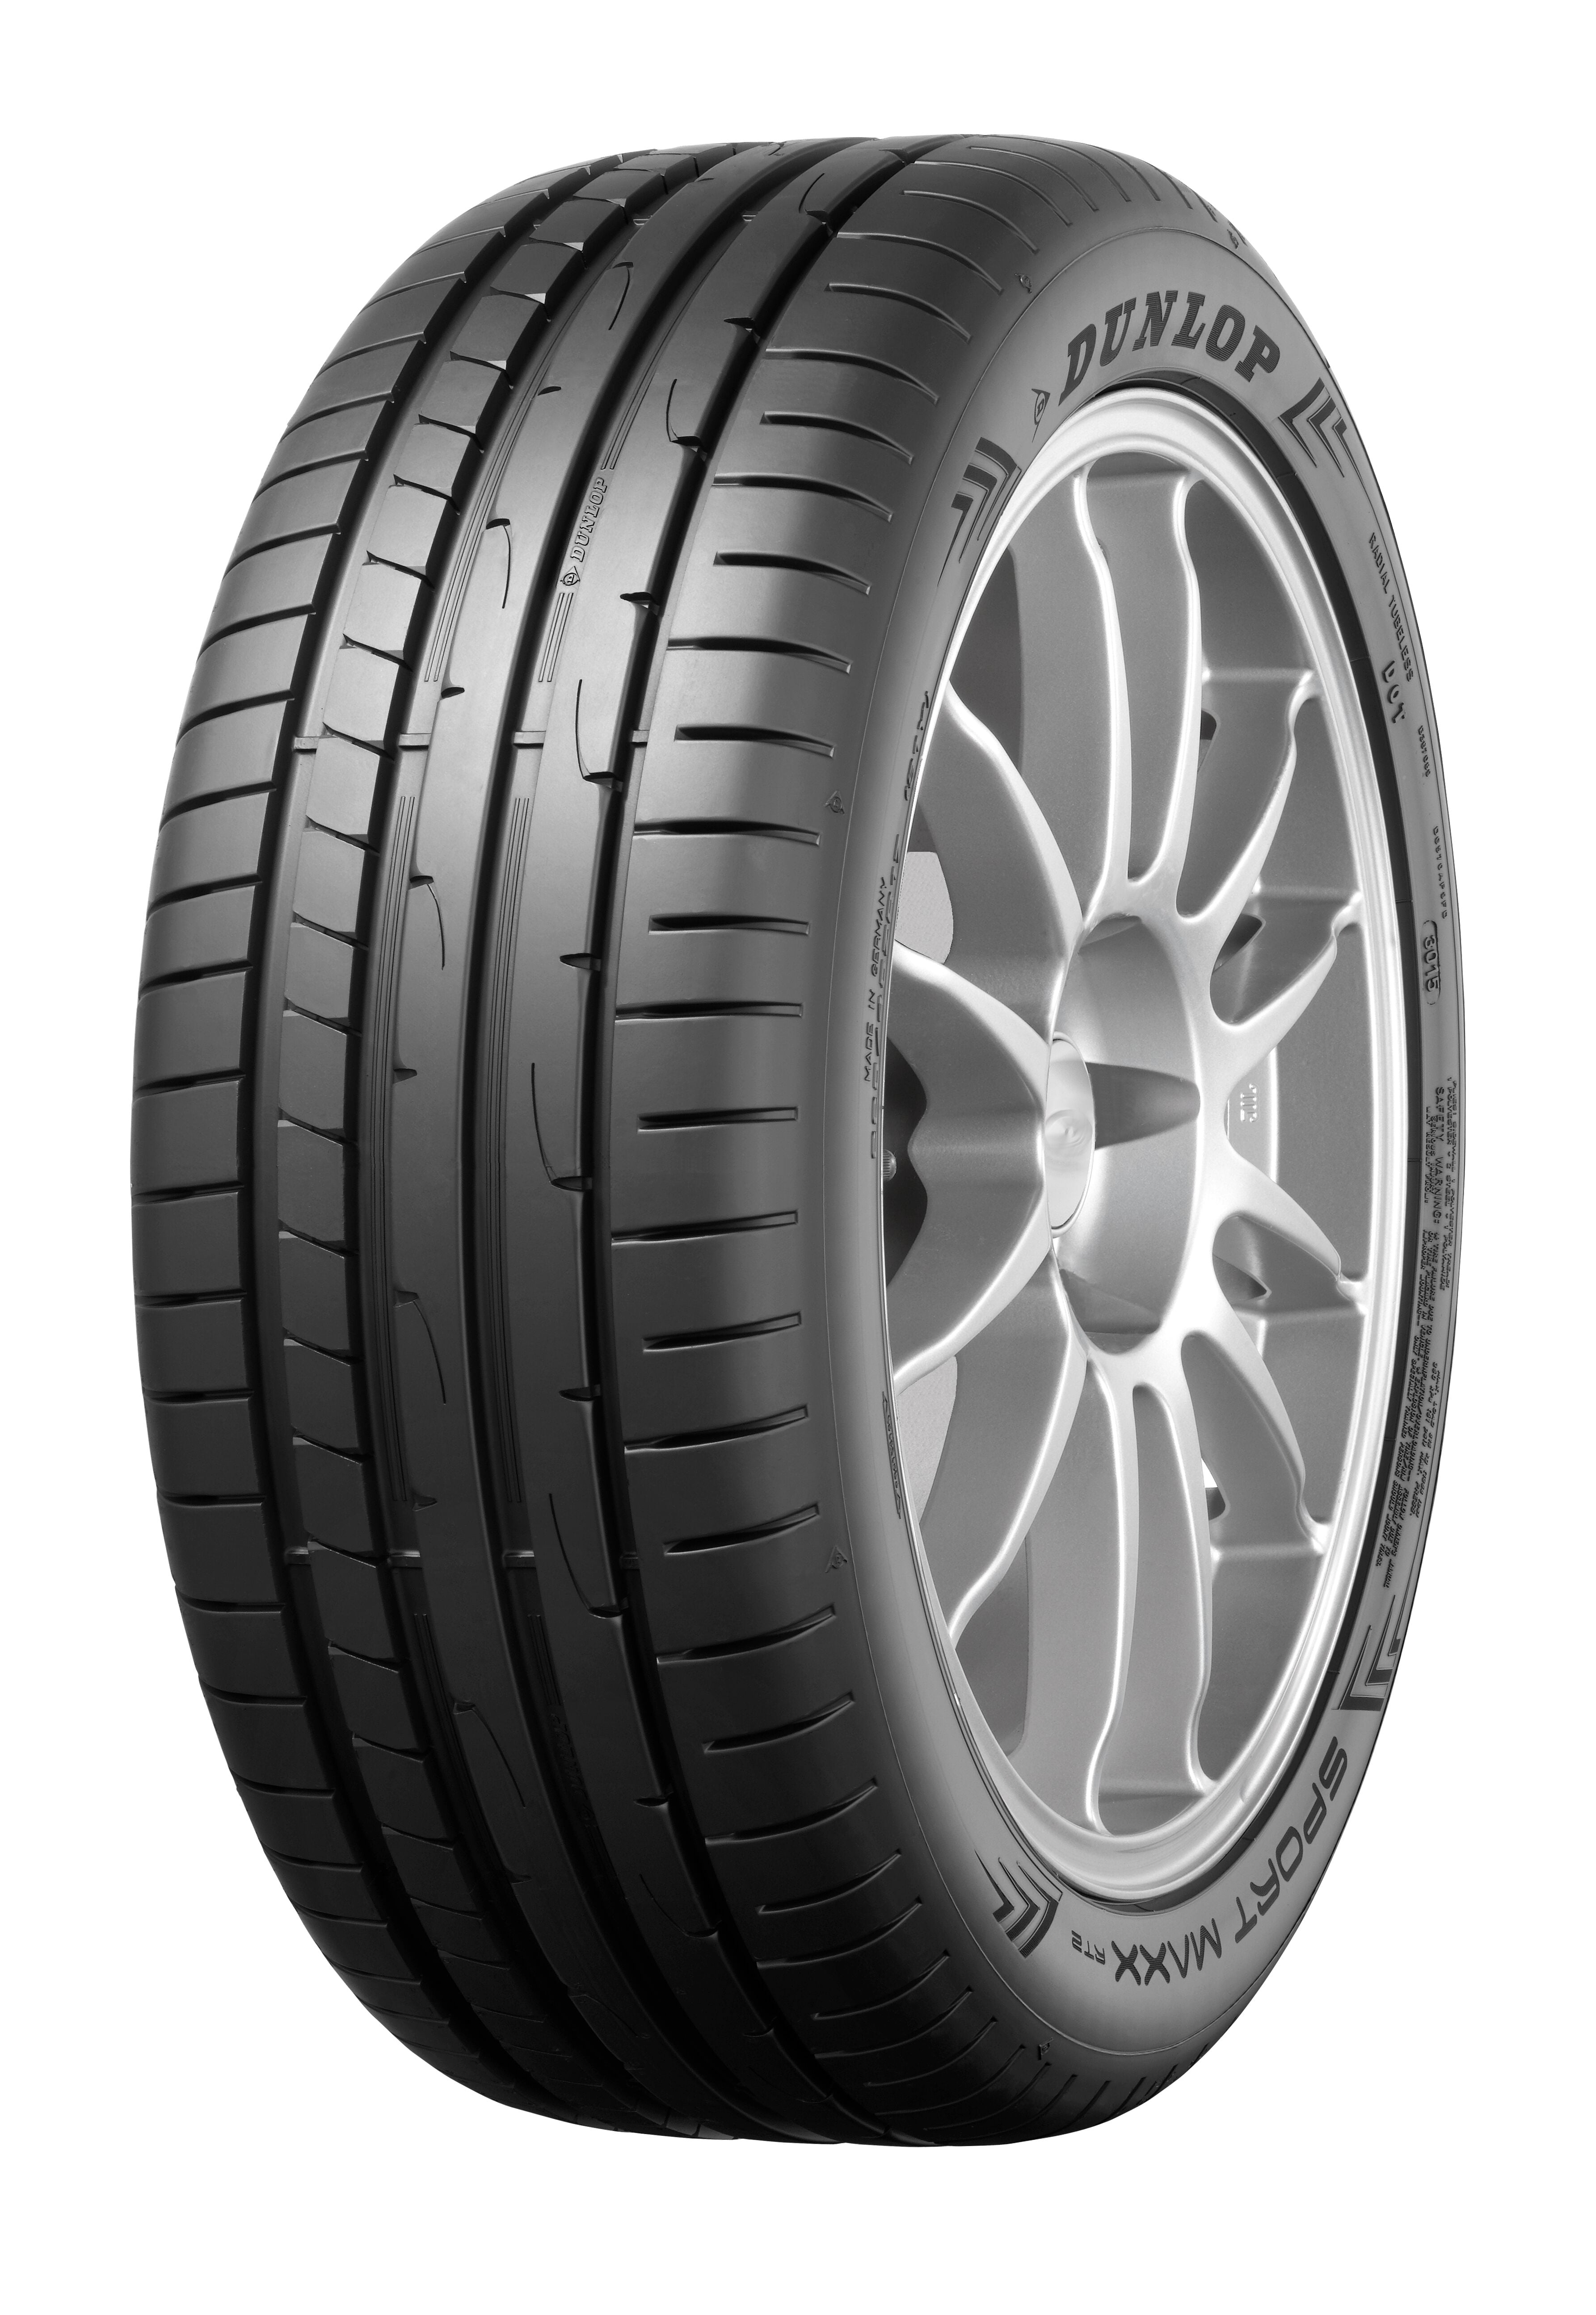 Dunlop Sport Maxx Rt2 Tire 265/35ZR18 97Y Performance